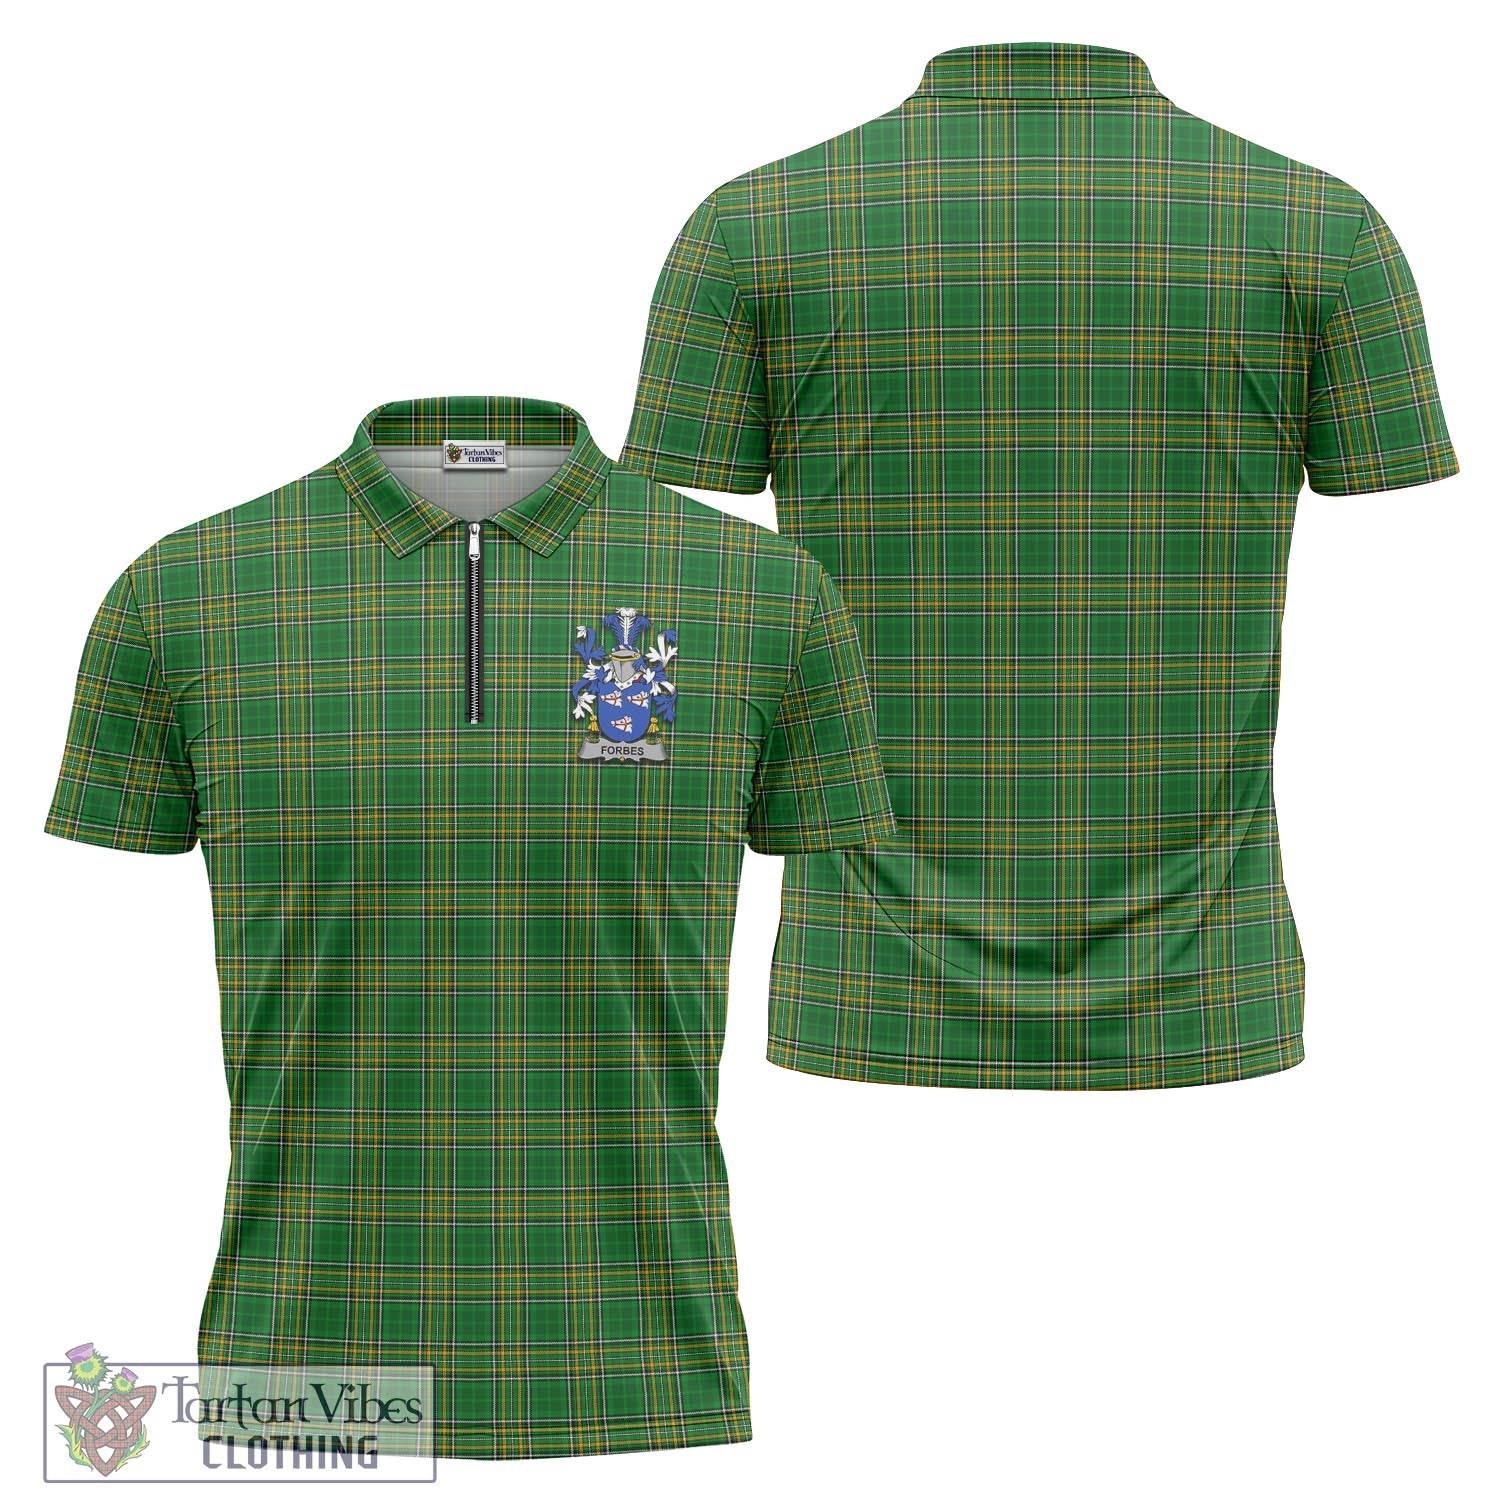 Tartan Vibes Clothing Forbes Ireland Clan Tartan Zipper Polo Shirt with Coat of Arms